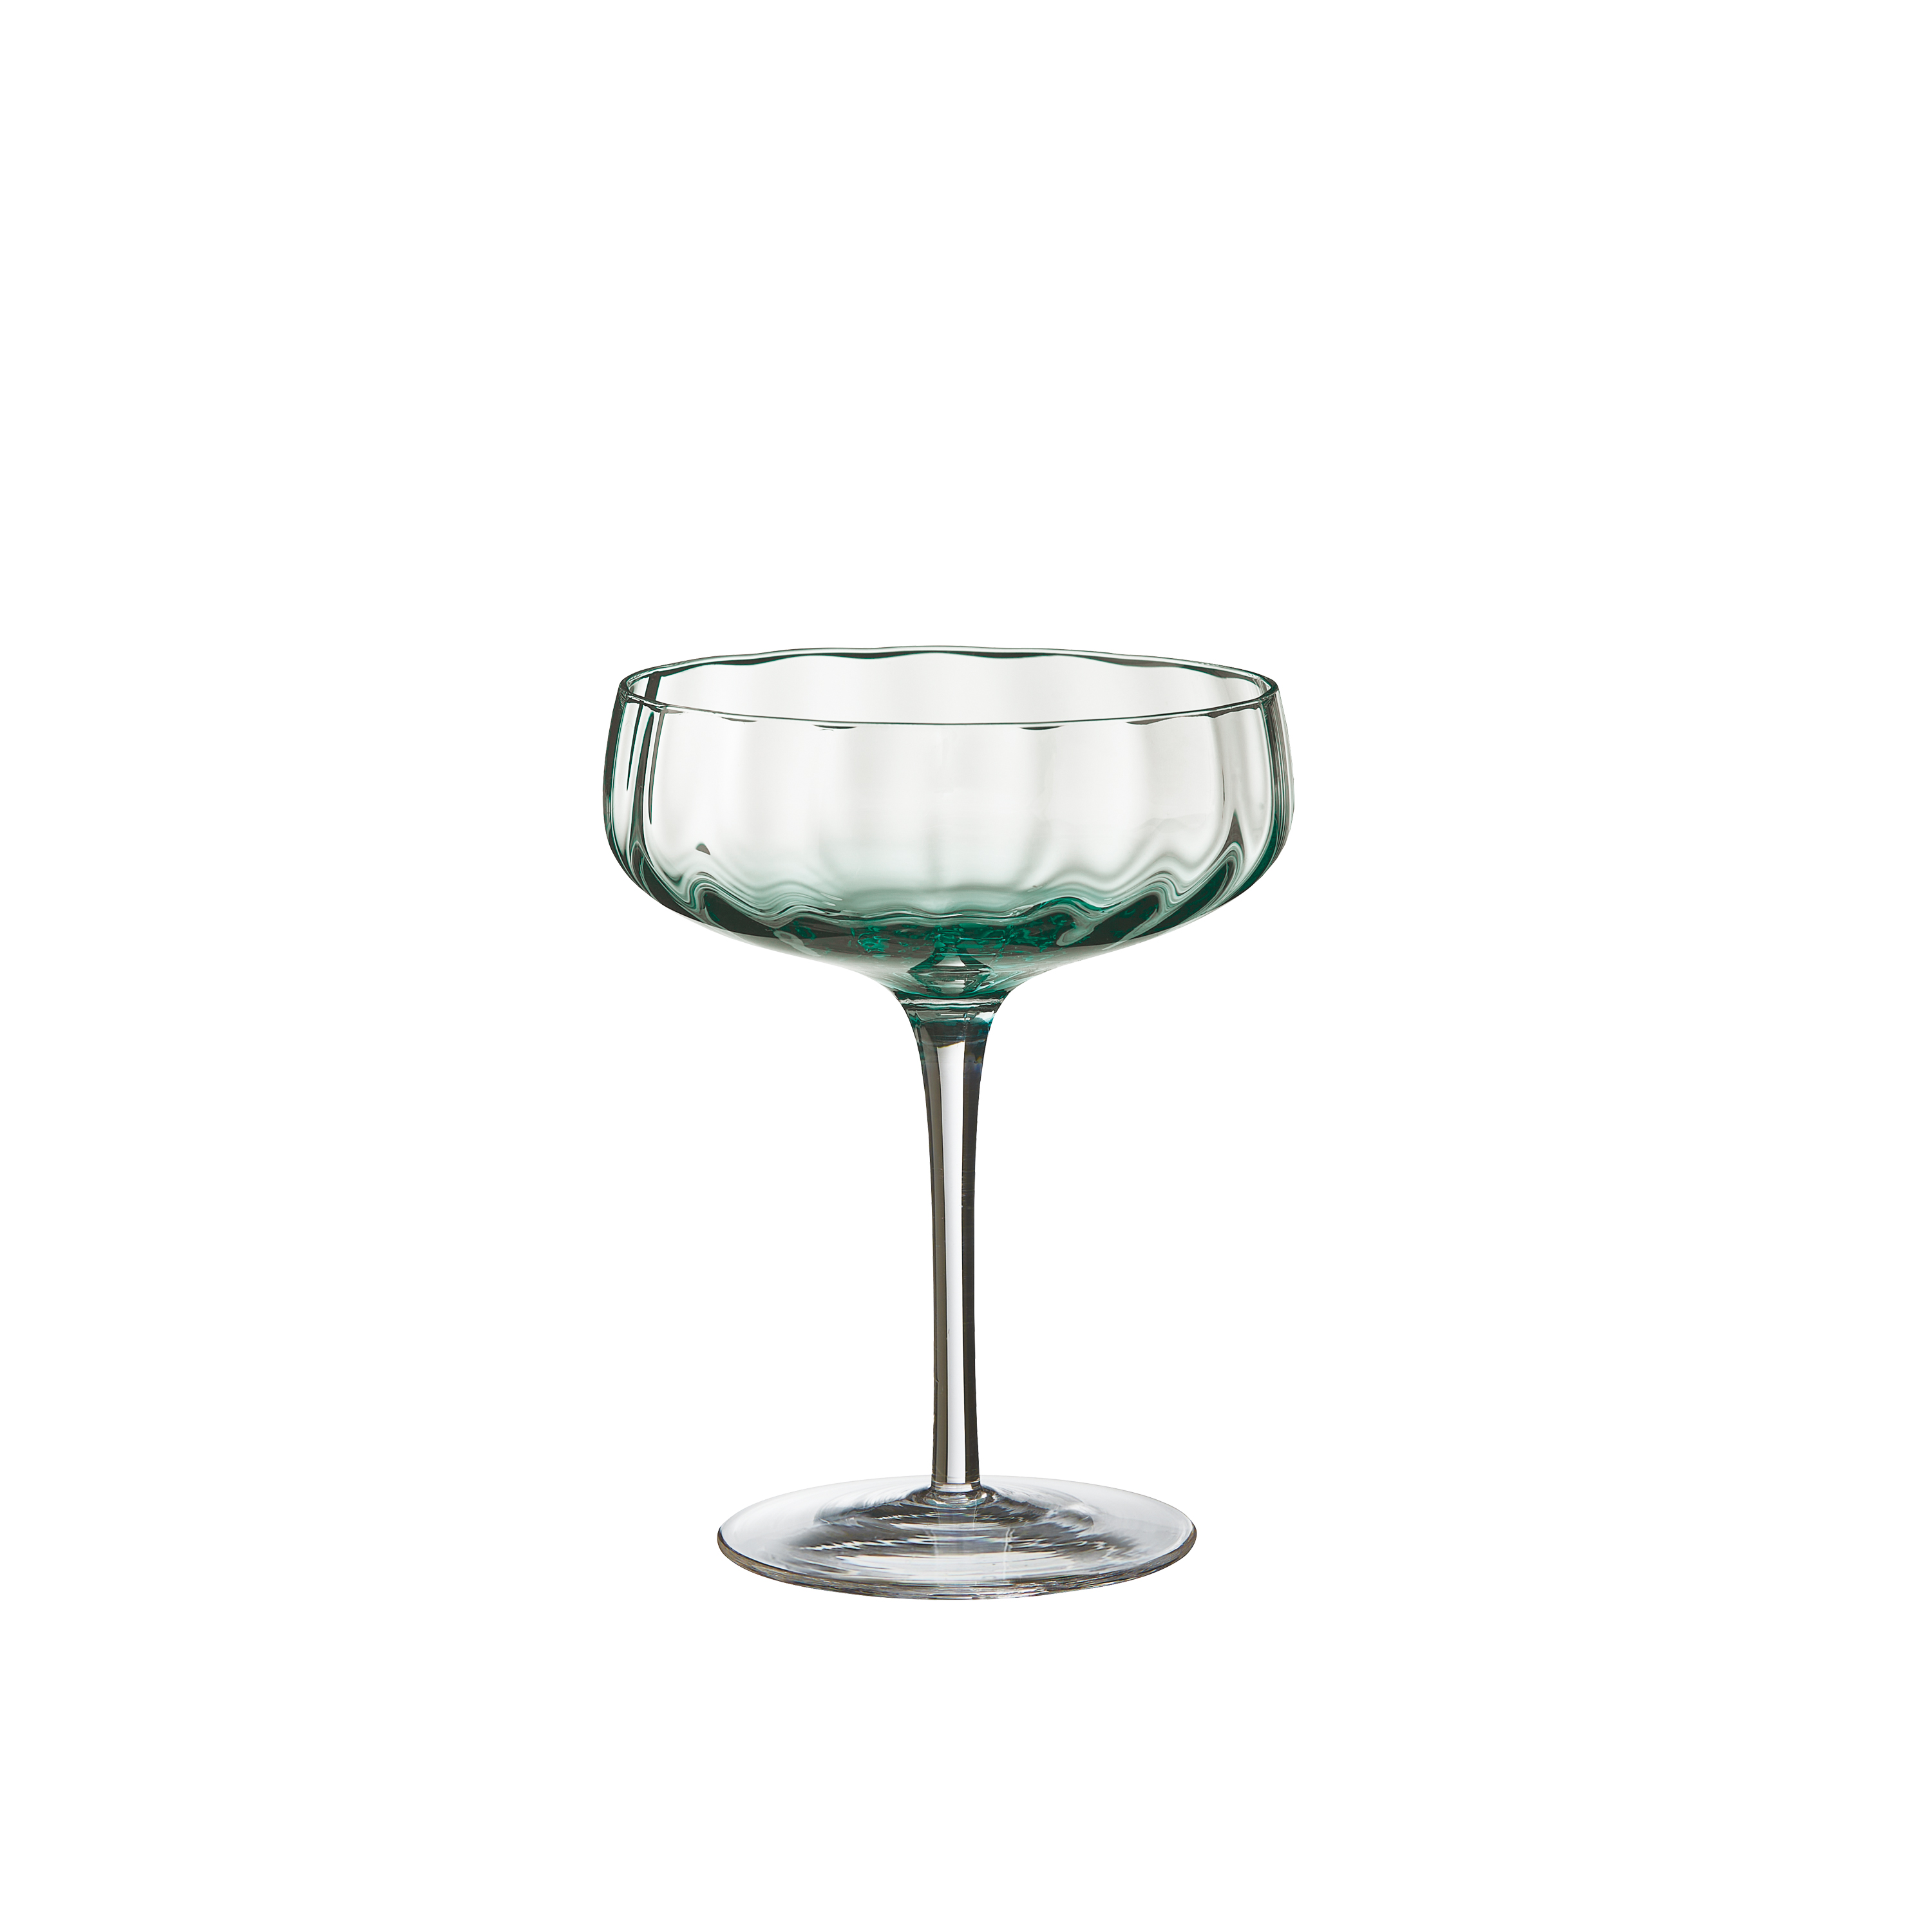 SØHOLM Sonja - champagne/cocktail glas 30 cl, grøn